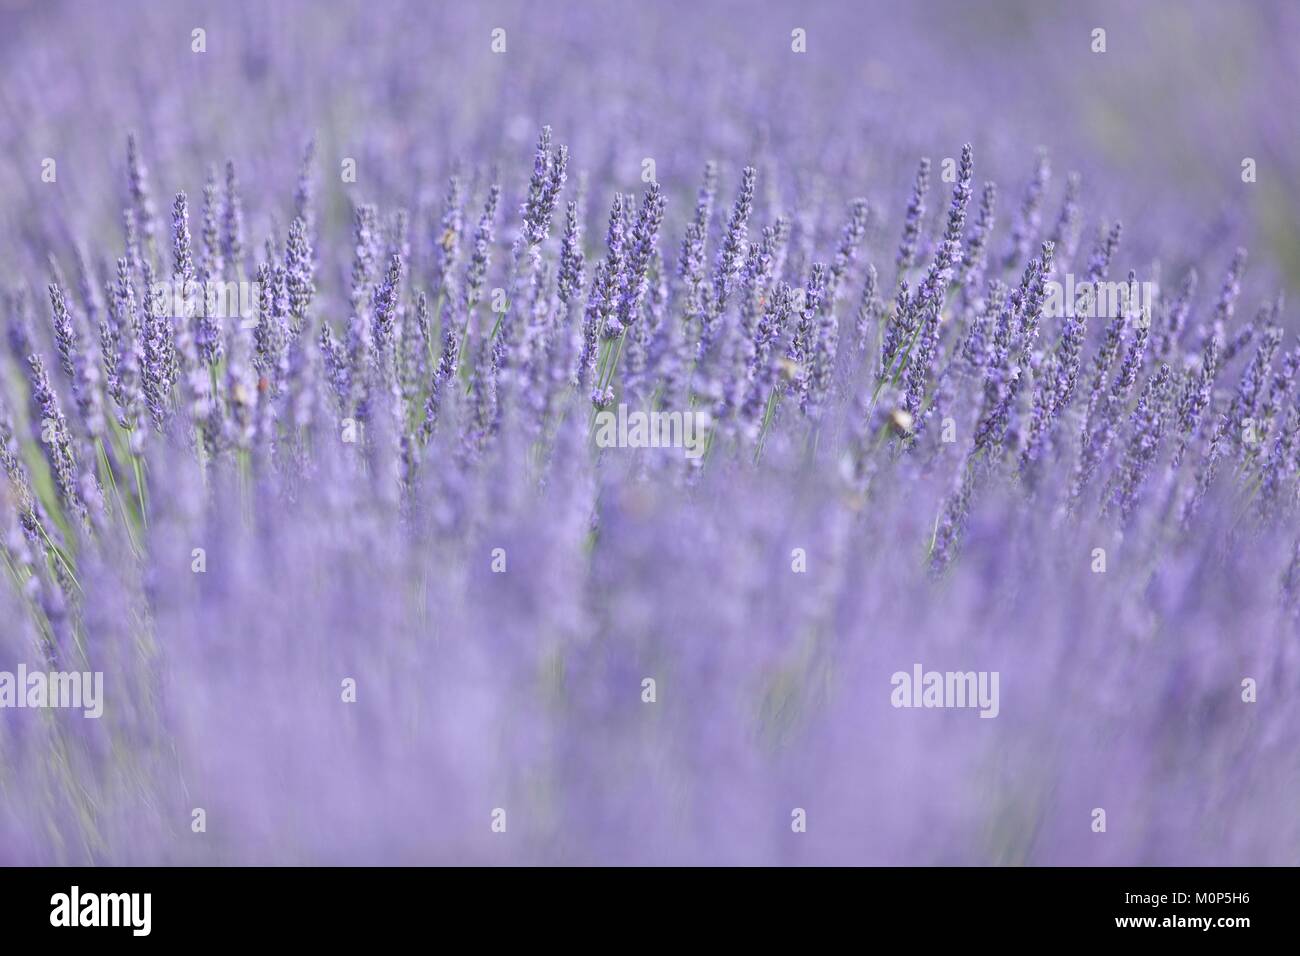 France,Vaucluse,Sault,true lavender (Lavandula angustifolia) of the Lamiaceae family Stock Photo